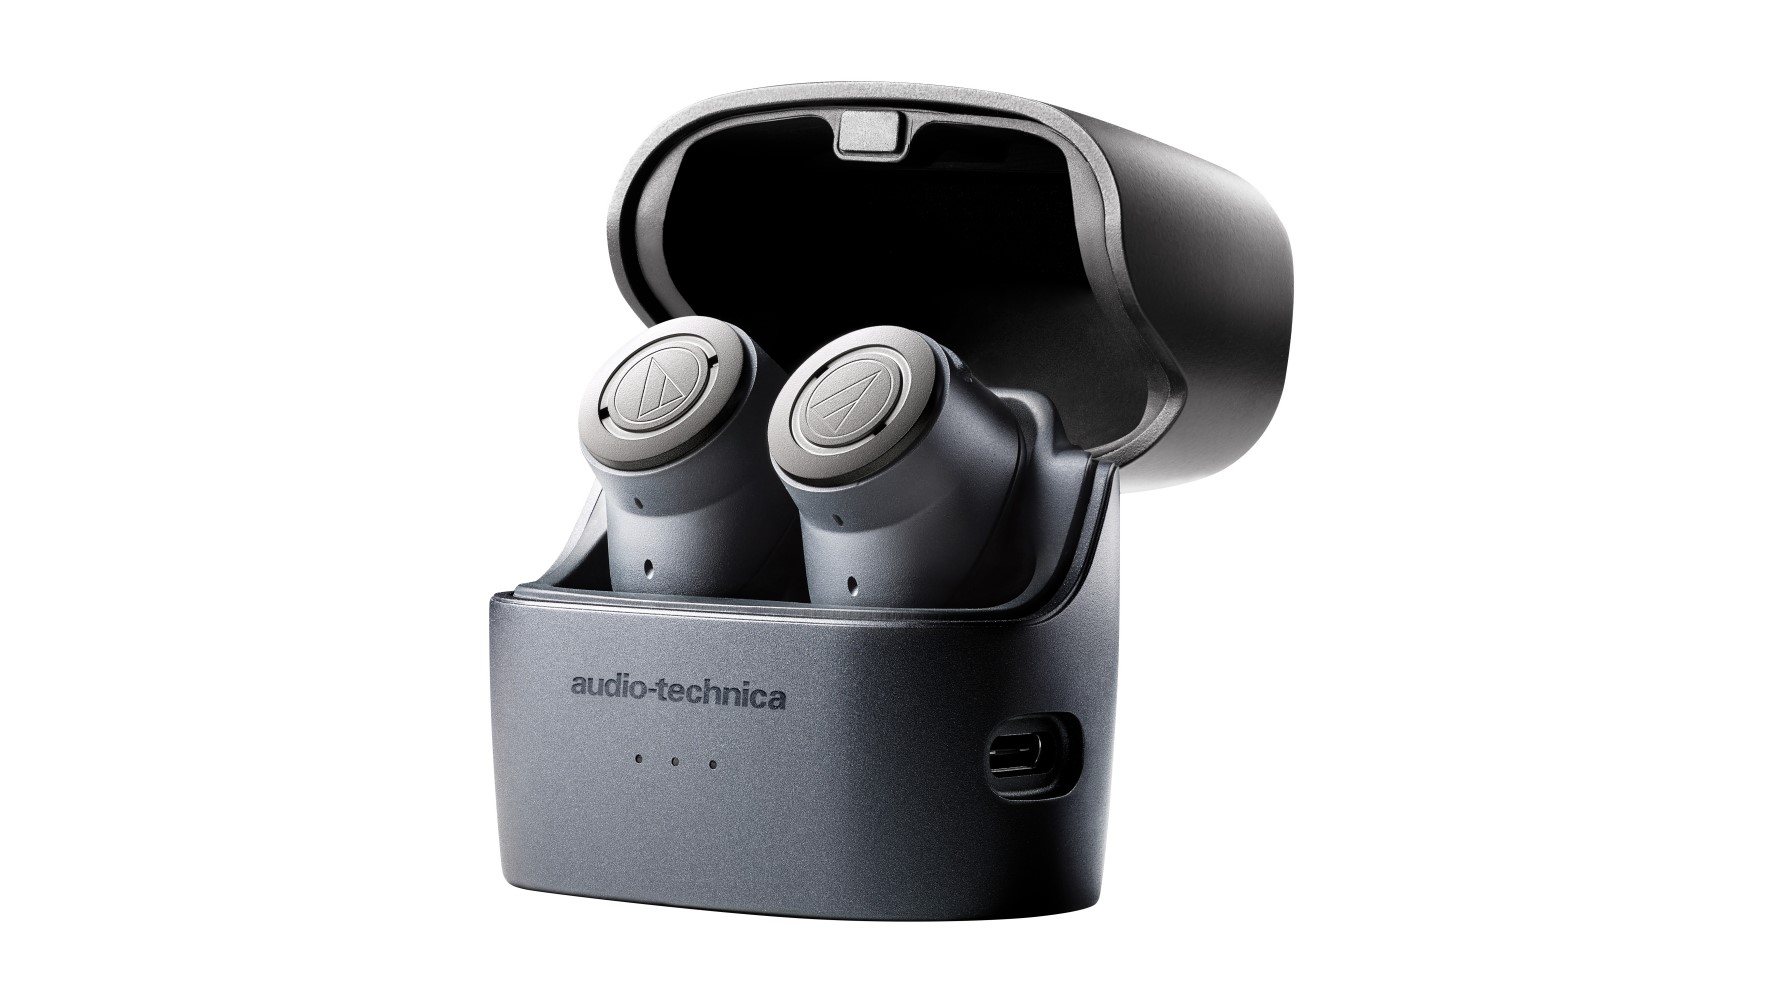 Audio Technica QuietPoint ATH ANC300TW true wireless earbuds inside case